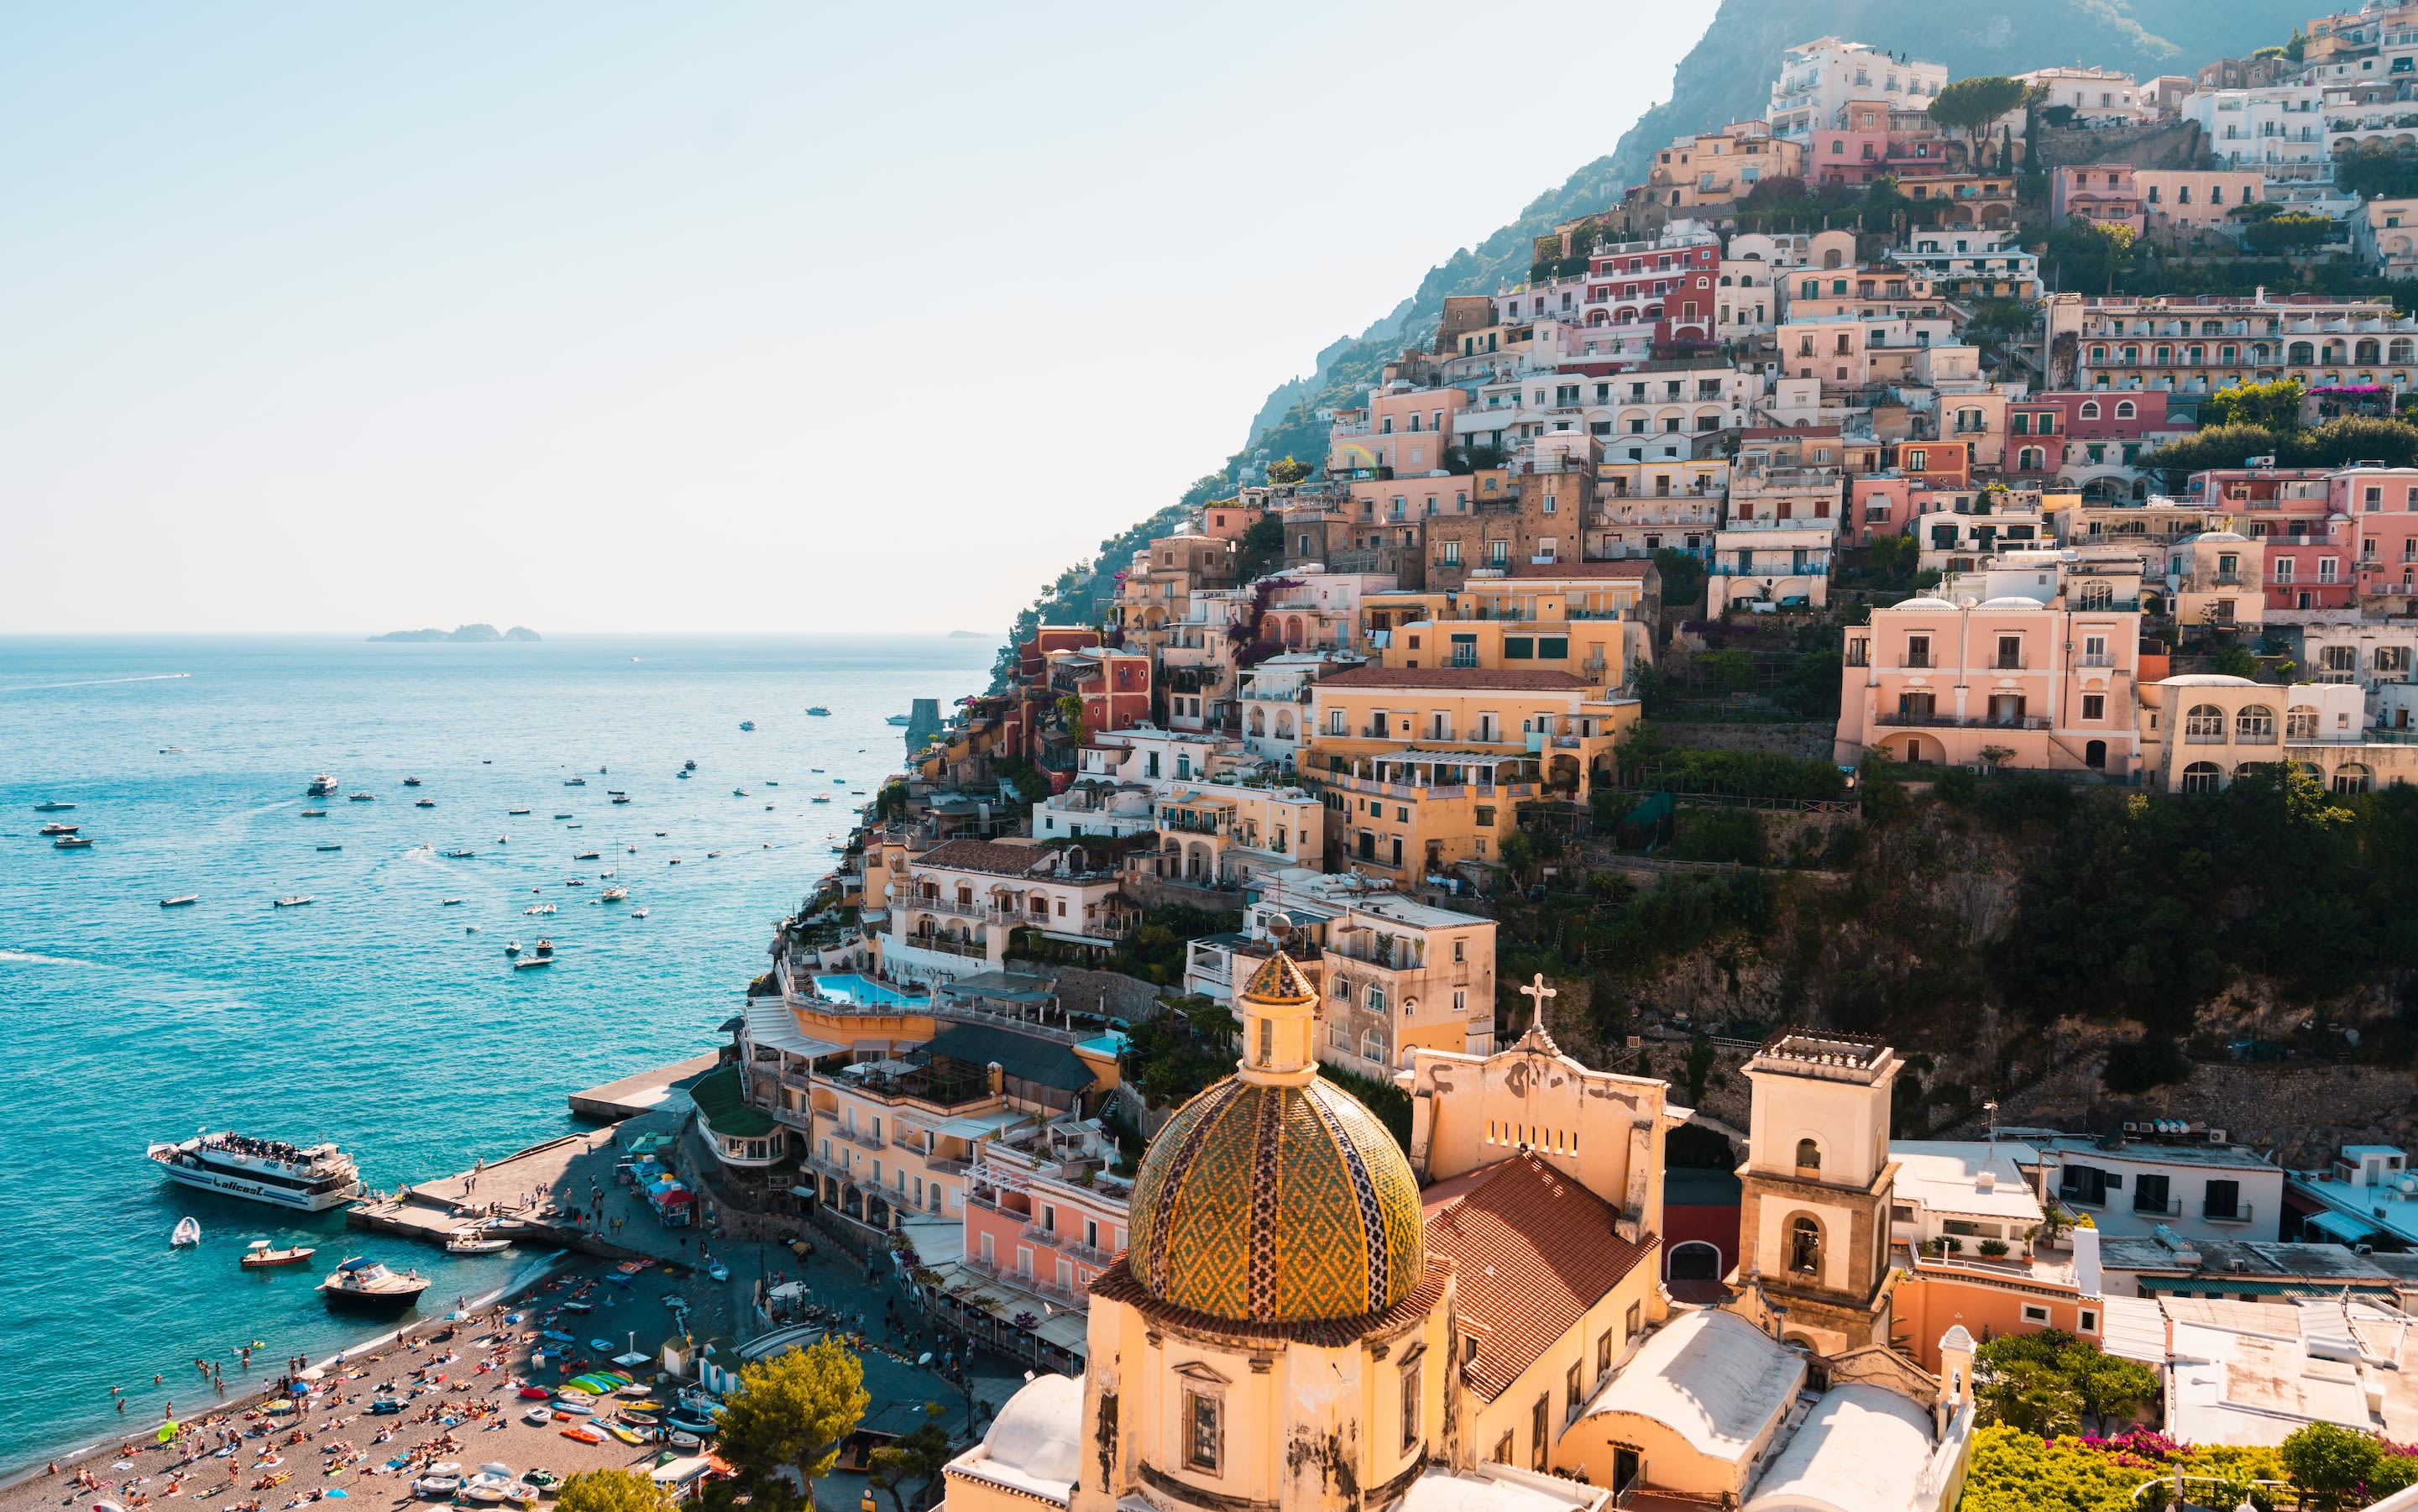 The perfect holiday on the Amalfi Coast